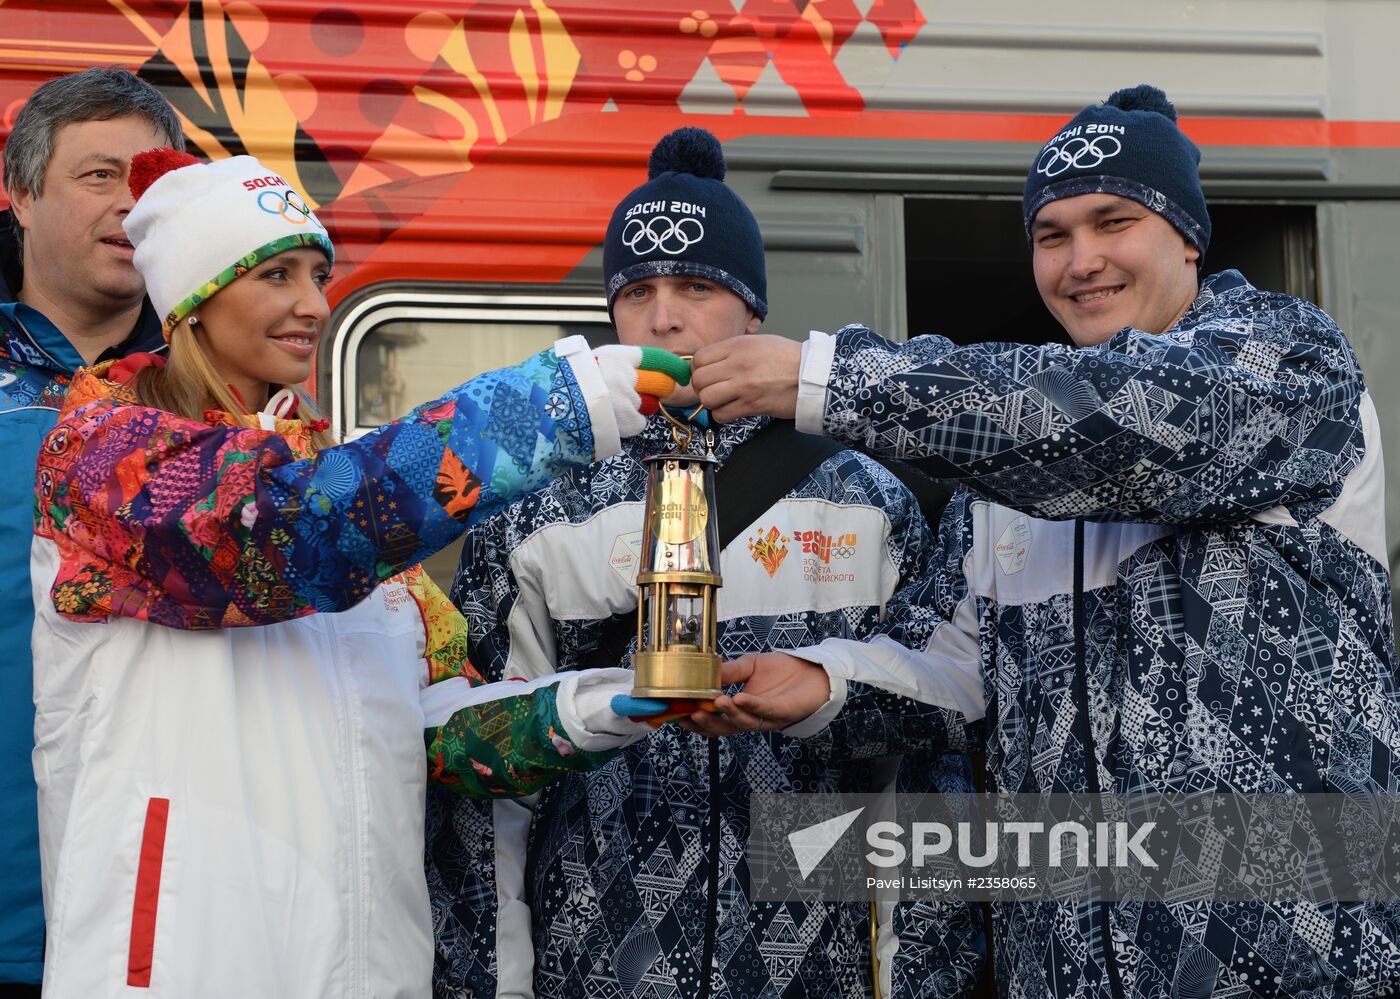 Olympic torch relay. Sochi. Day 2